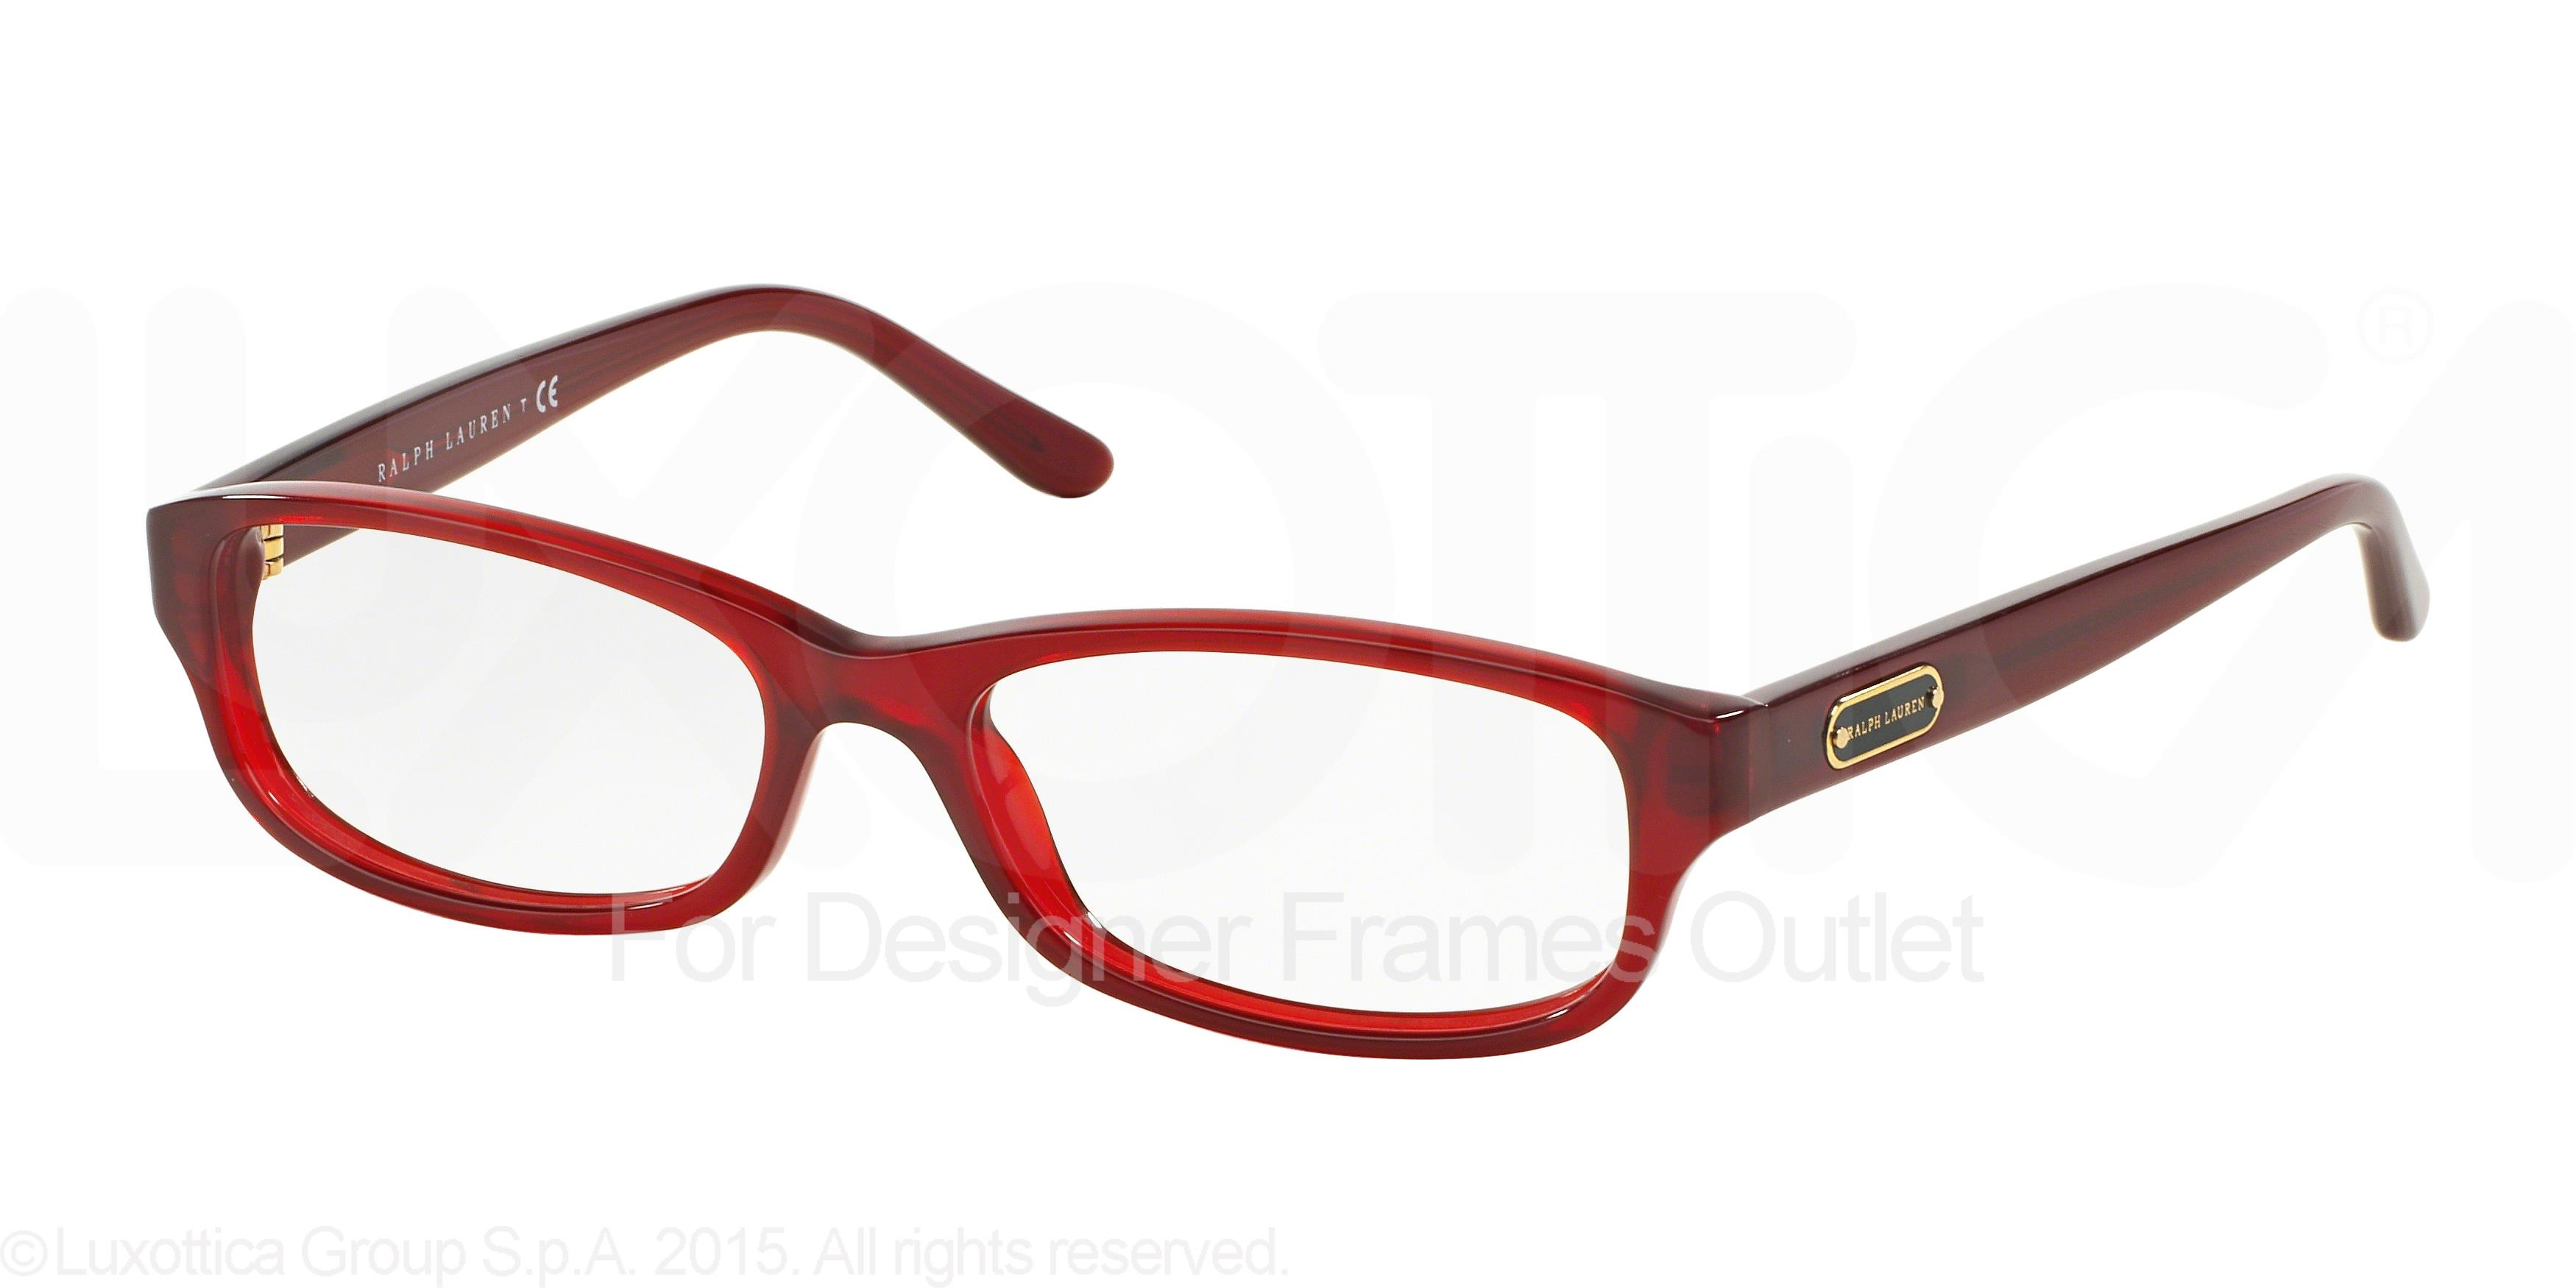 Picture of Ralph Lauren Eyeglasses RL6130